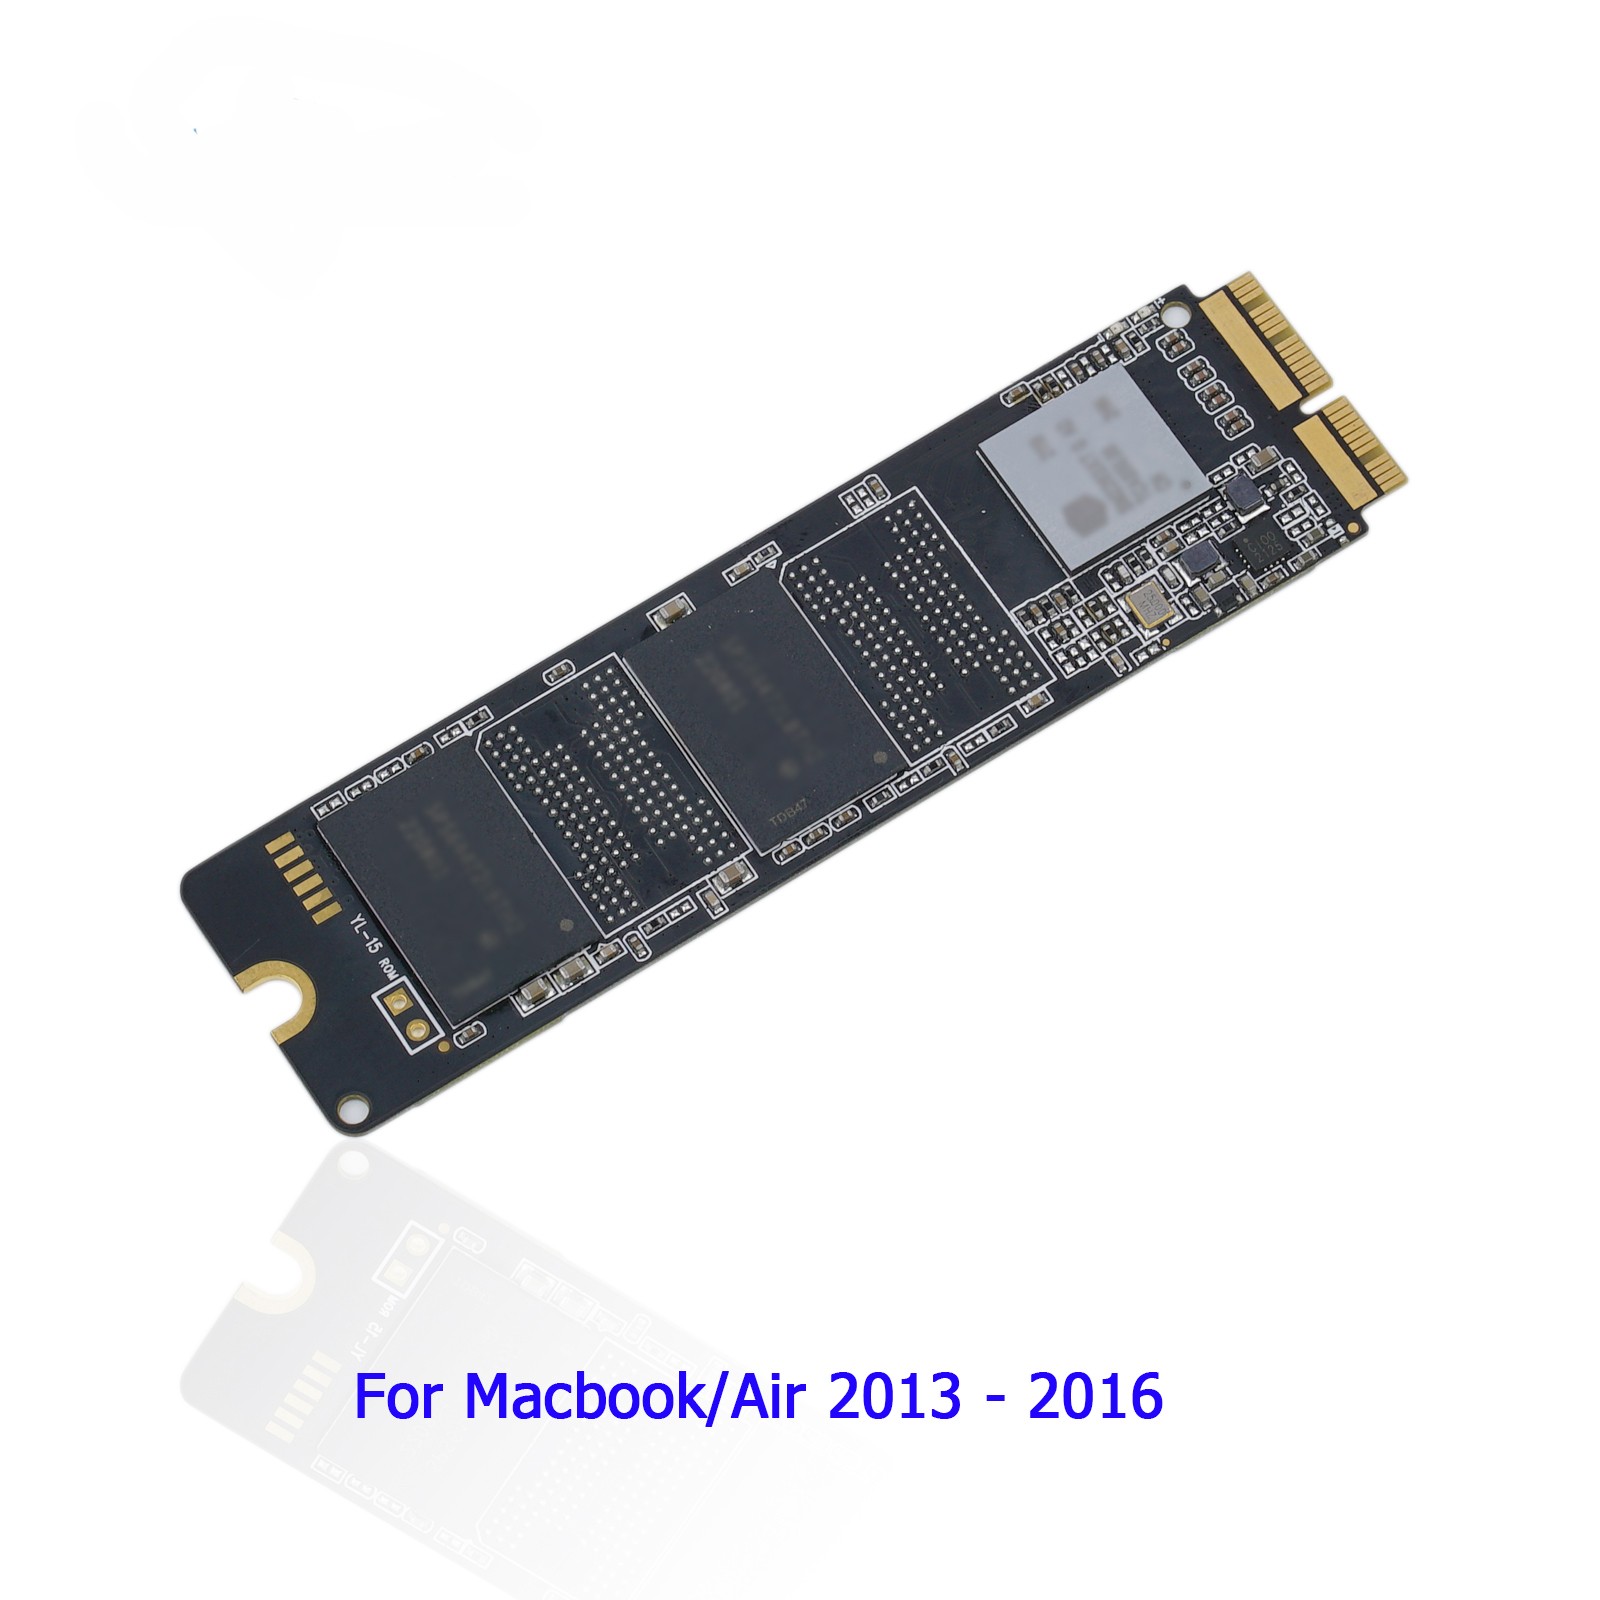 ROGOB 512GB PCIe SSD Gen3*4 NGFF Internal Solid State Drive, Upgrade Speed & Storage Drive for 2013-16 Mac, MacBook, Mac Pro, Air, Mini, iMac